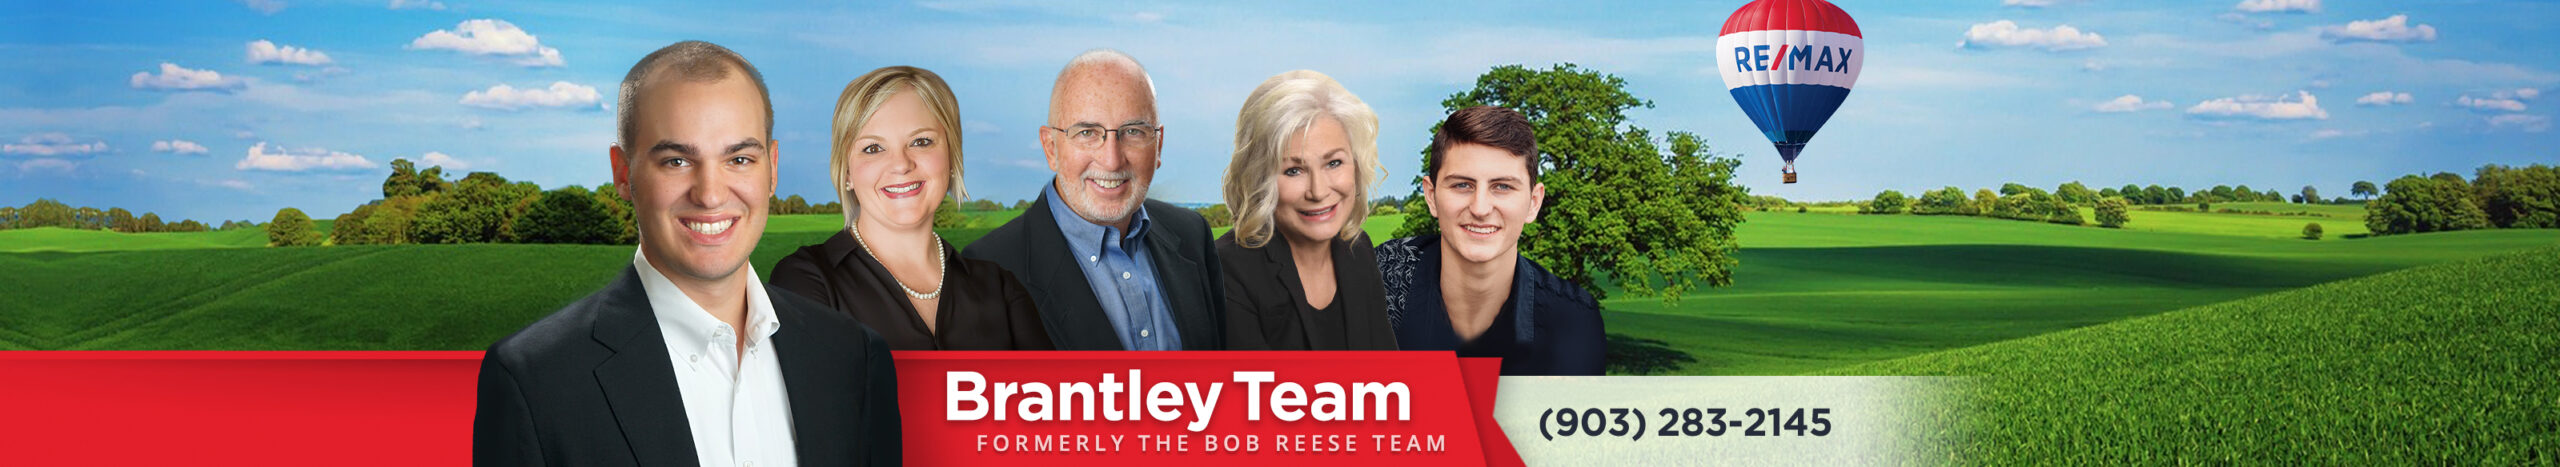 Photos of agents on the Brantley Team (formlery Bob Reese Team)